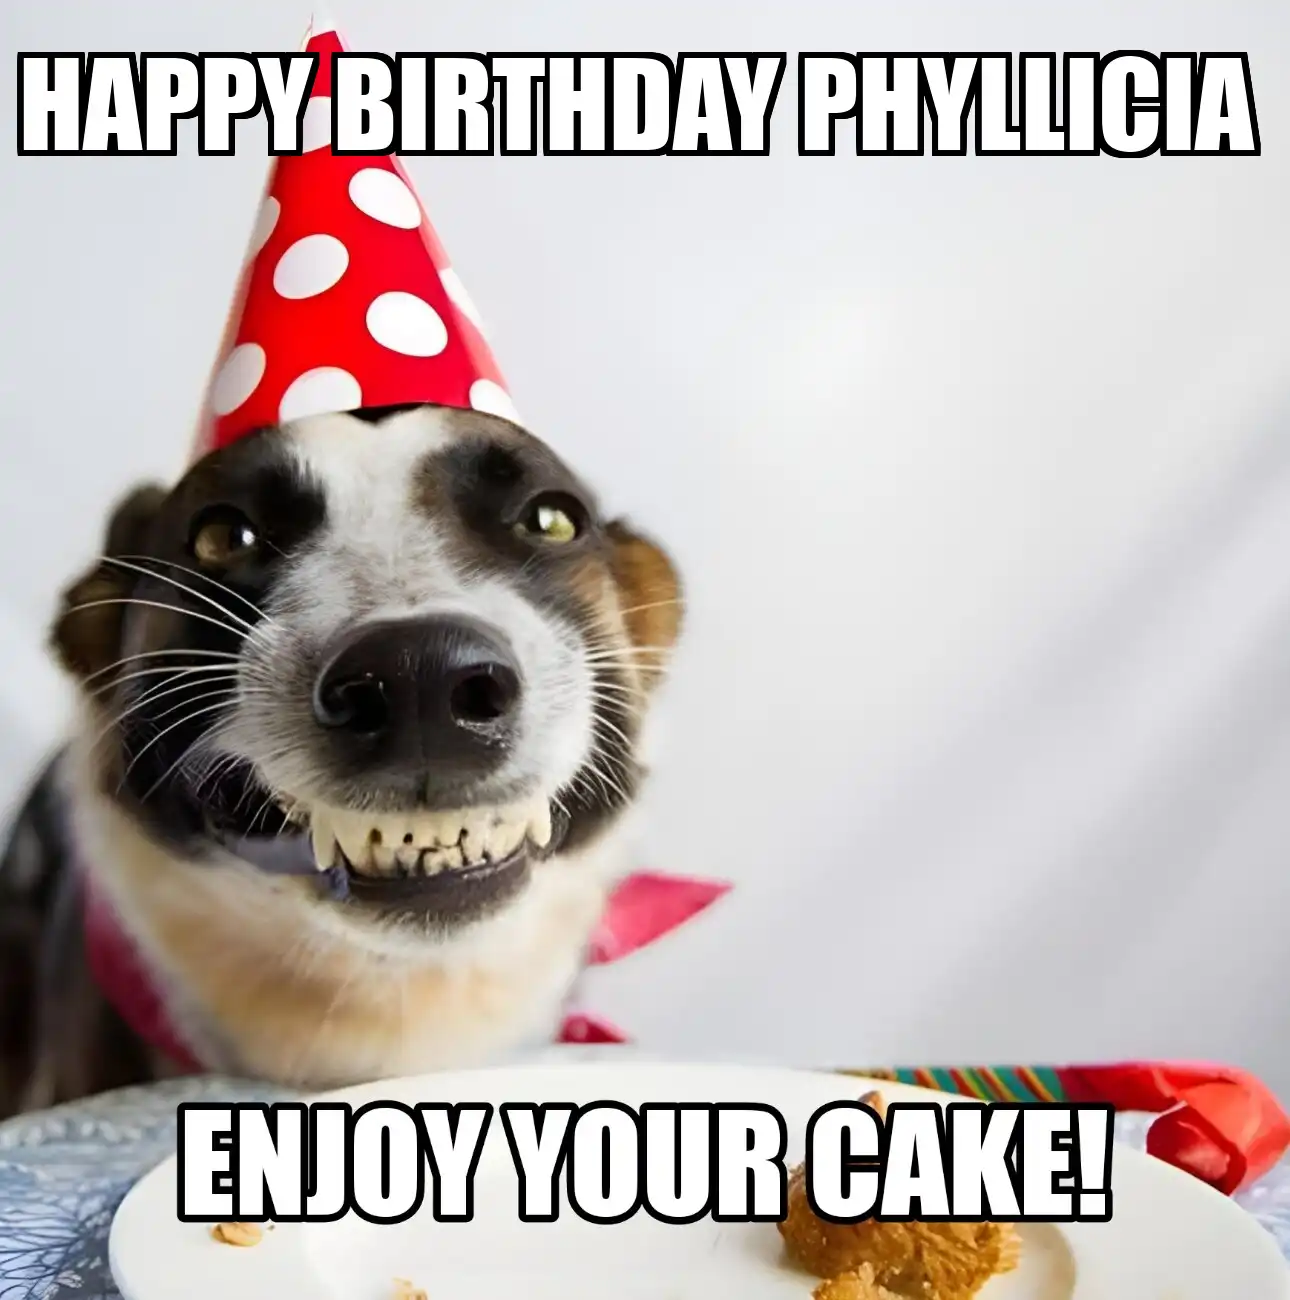 Happy Birthday Phyllicia Enjoy Your Cake Dog Meme